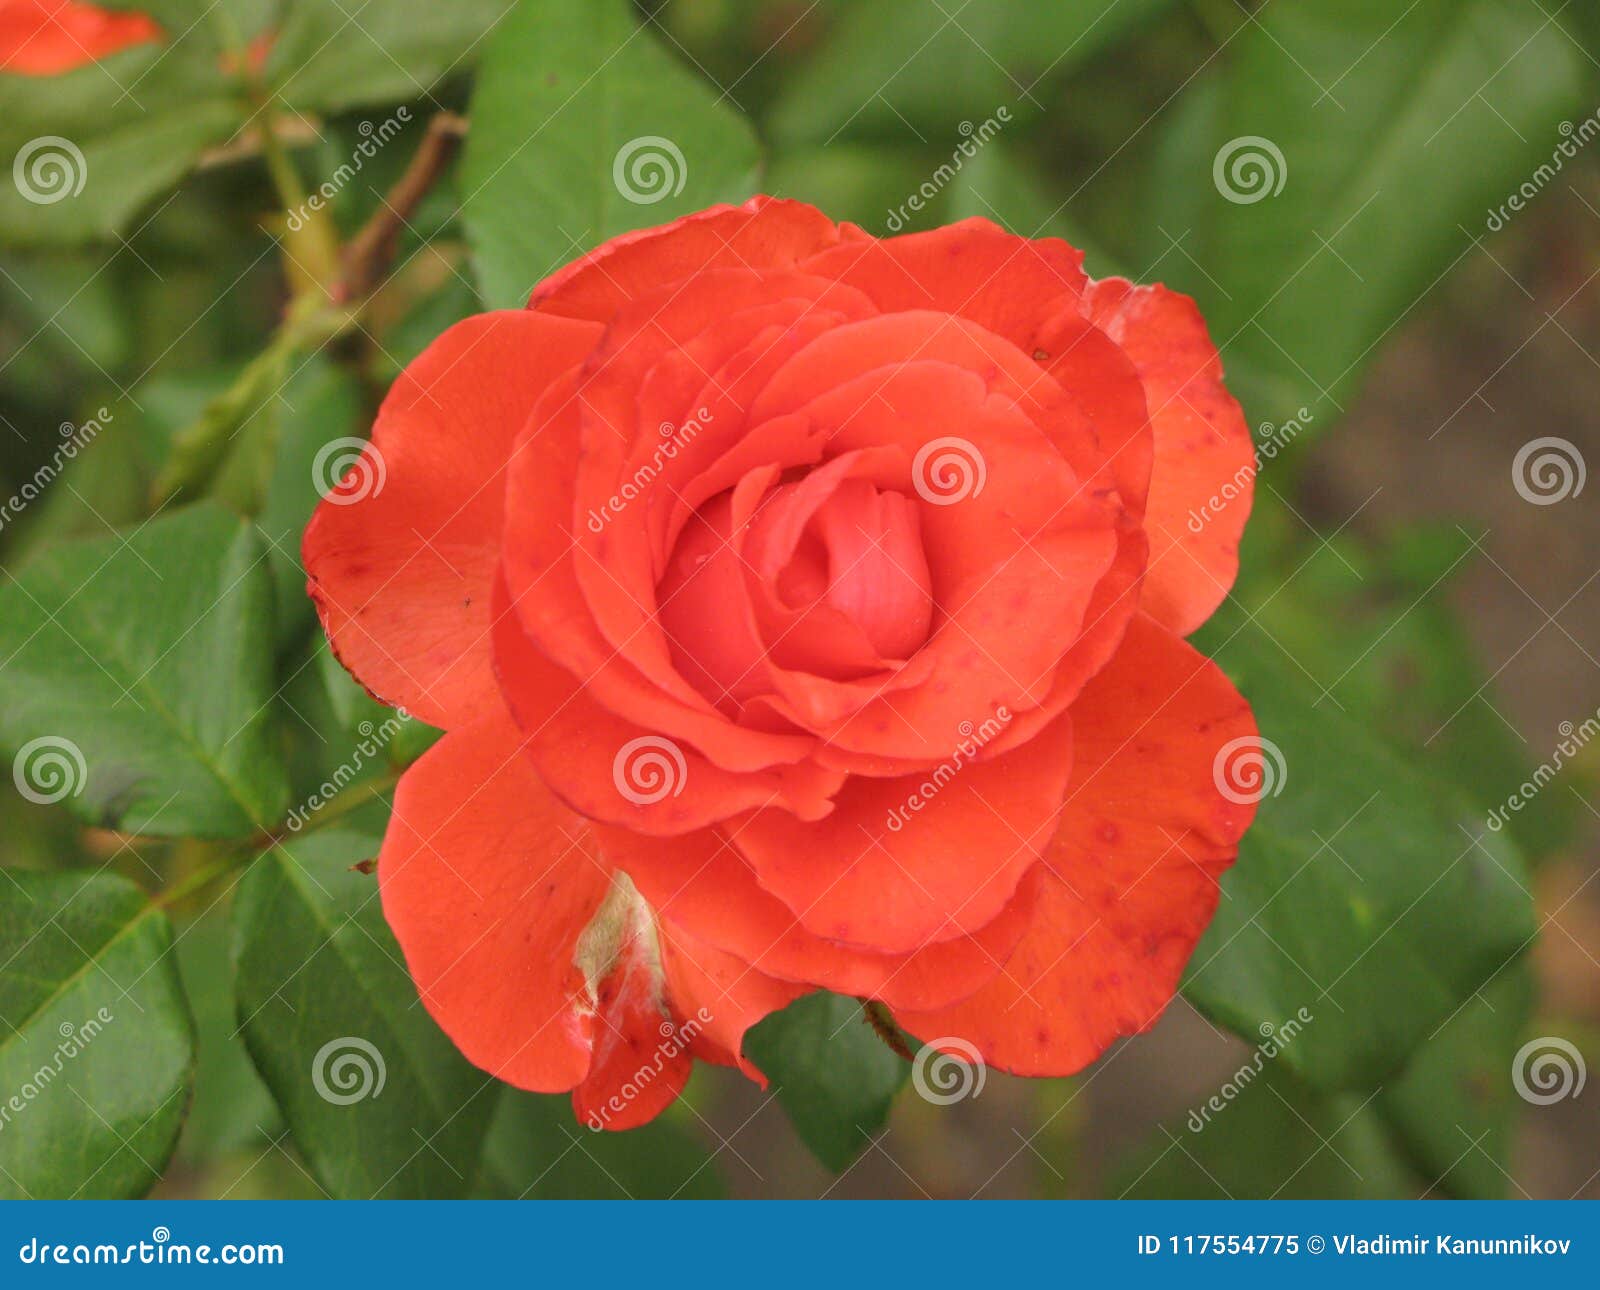 Small orange rose flower stock image. Image of little - 117554775